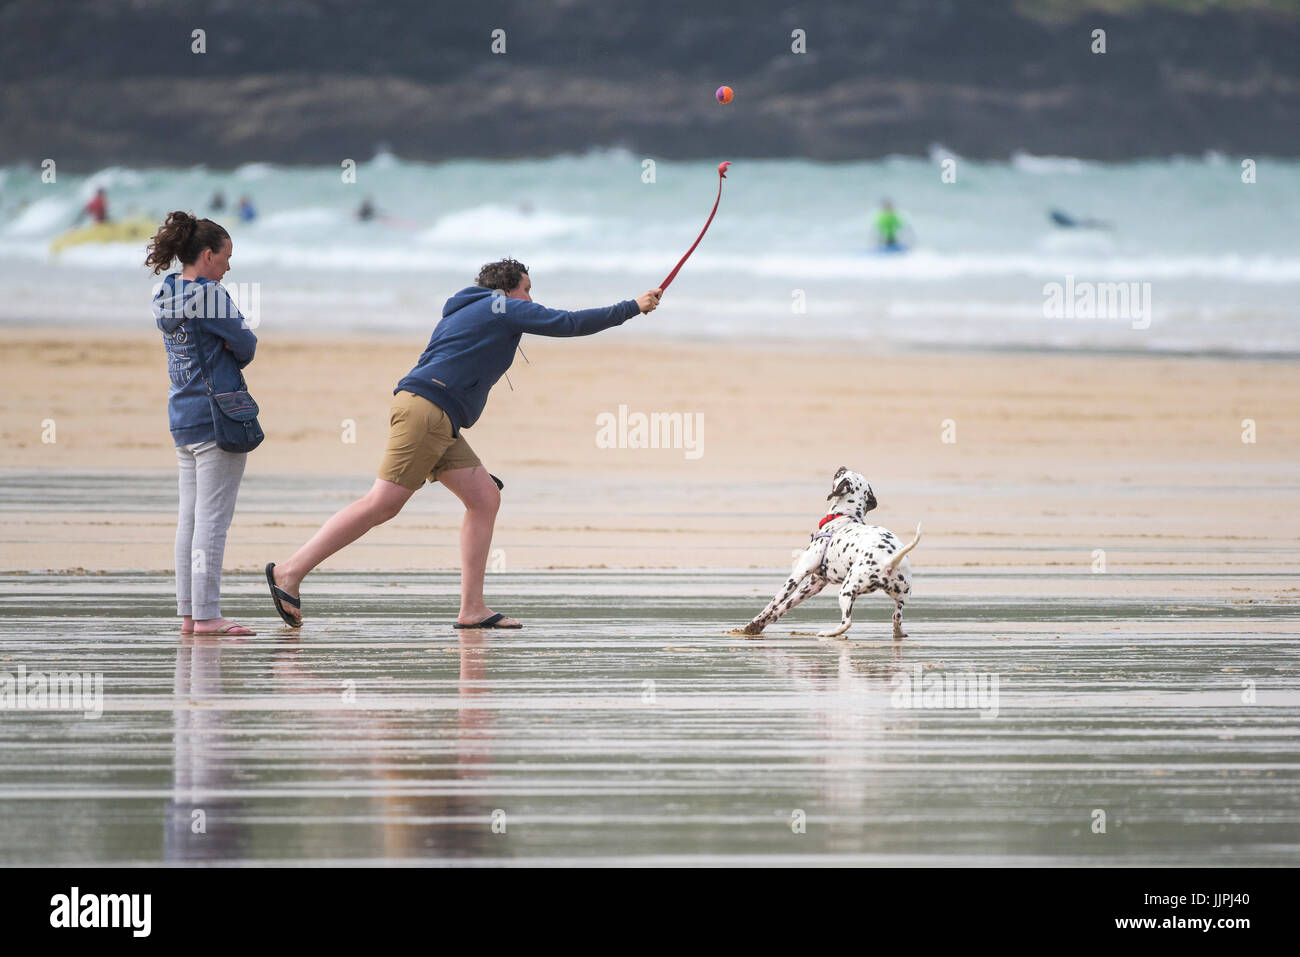 Dalmation dog chasing ball on Fistral Beach. Stock Photo